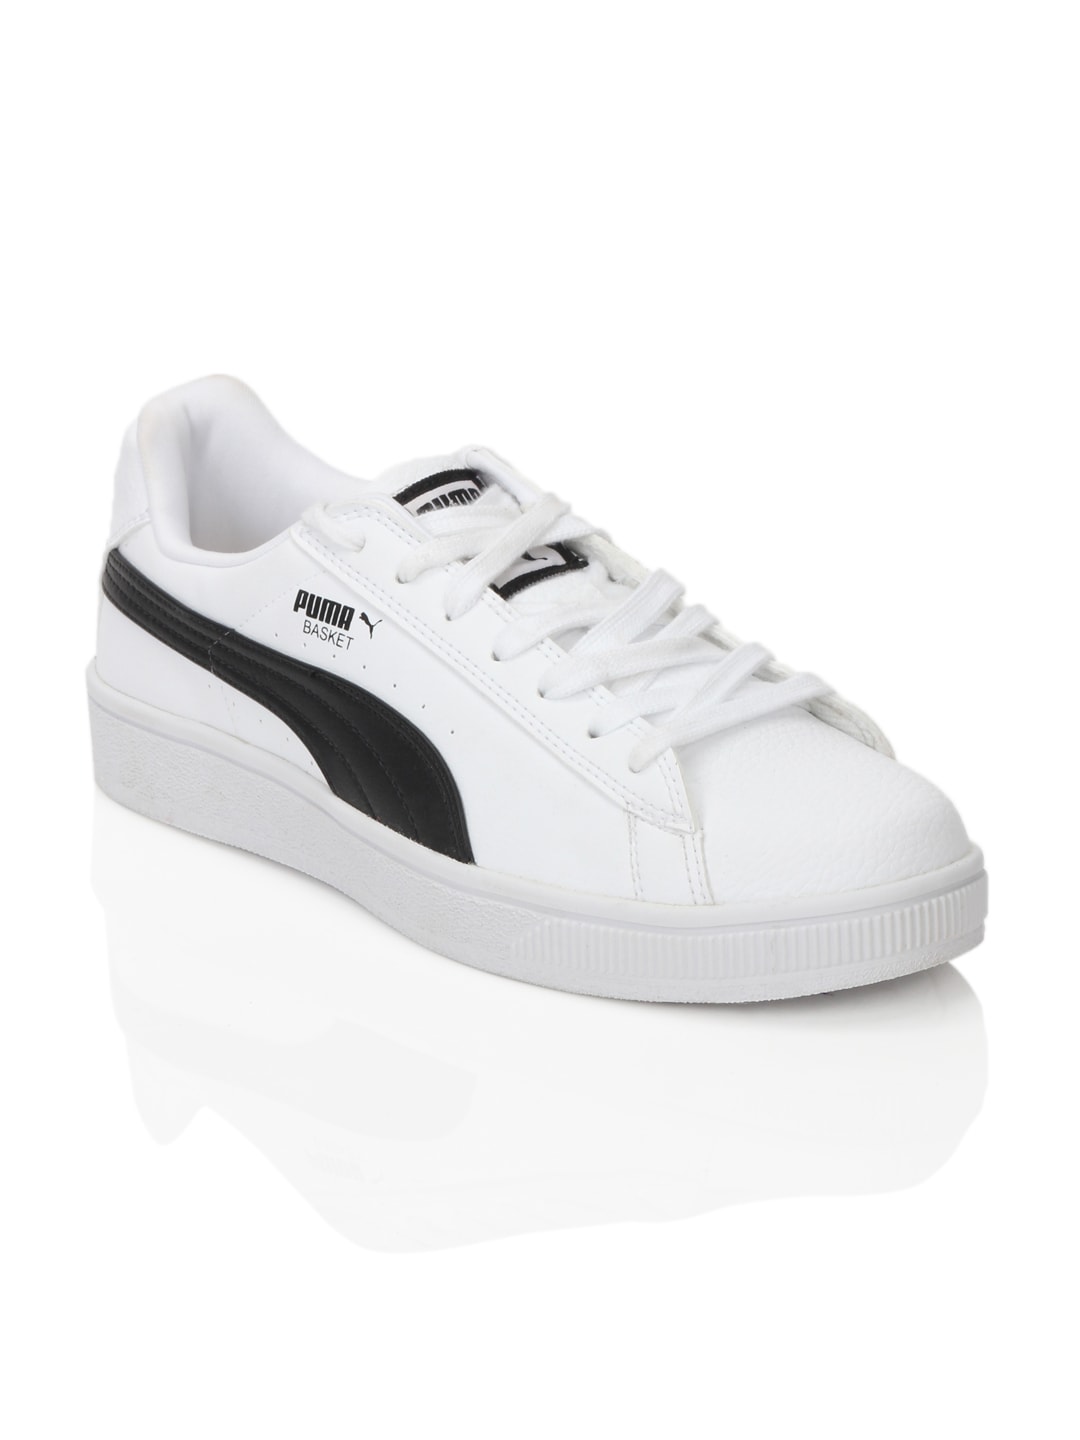 Puma Men II Biz White Shoes